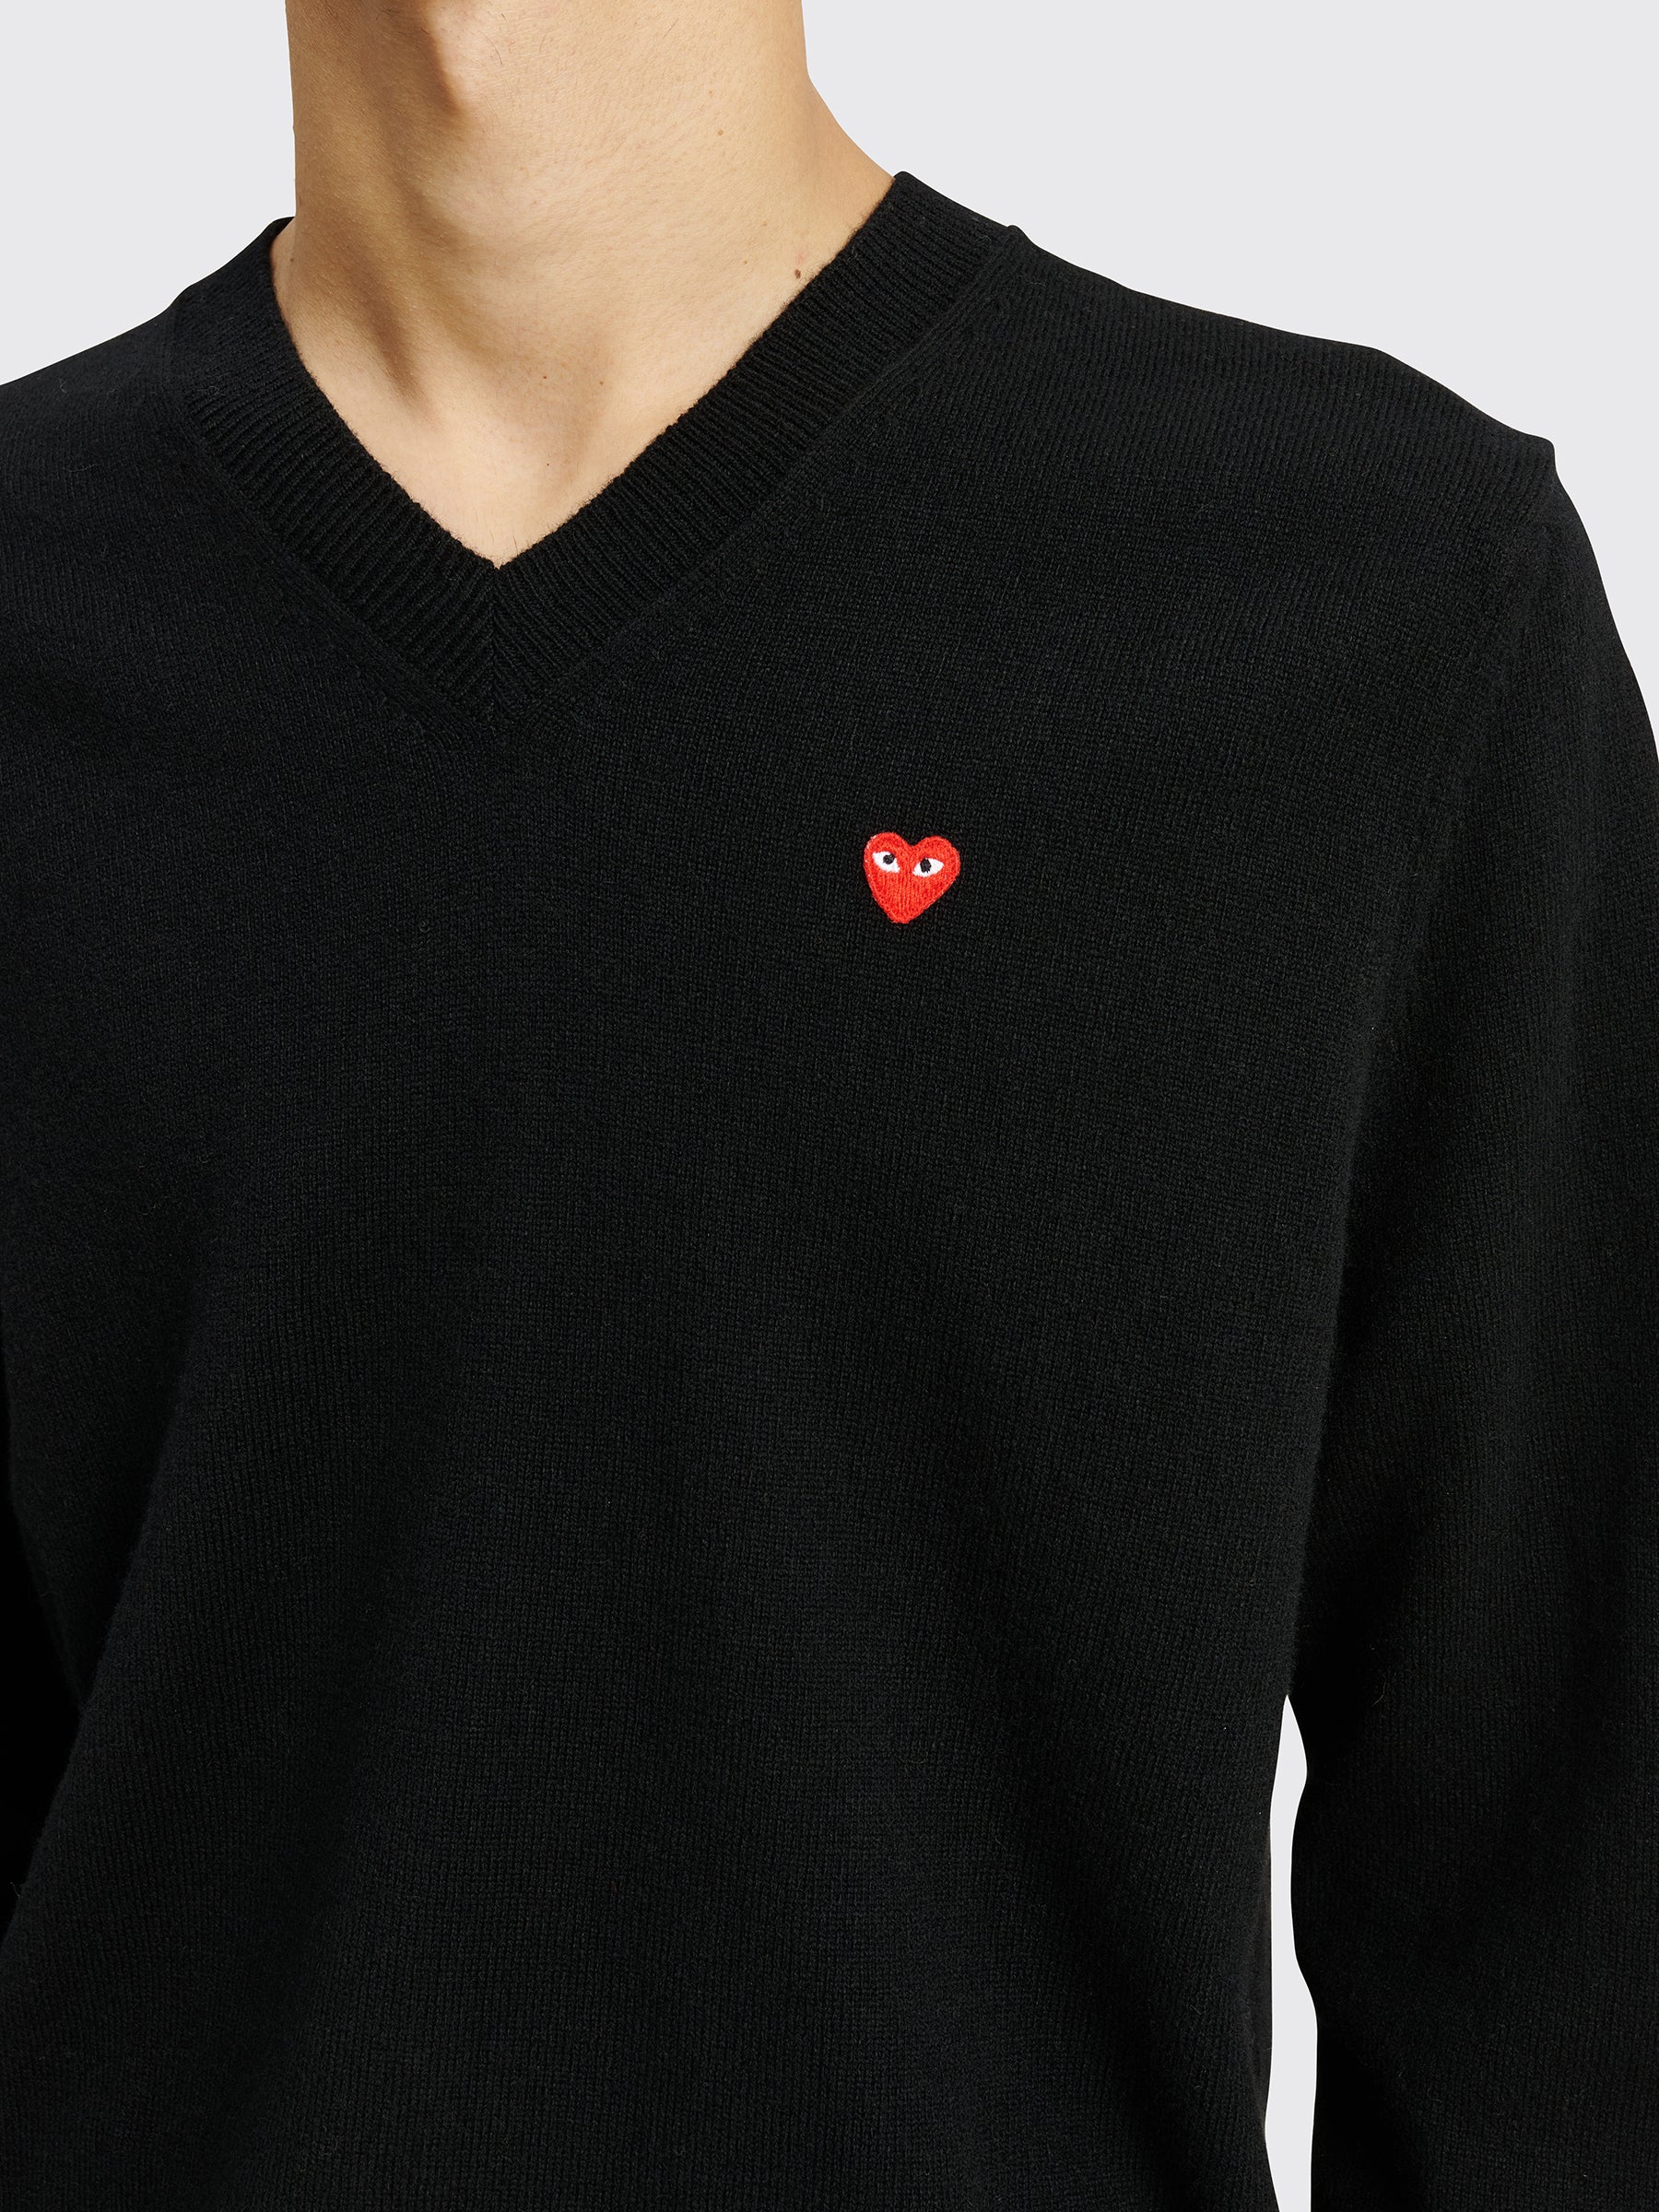 Comme des Garçons Play Mini Heart V-Neck Knit Sweater Black